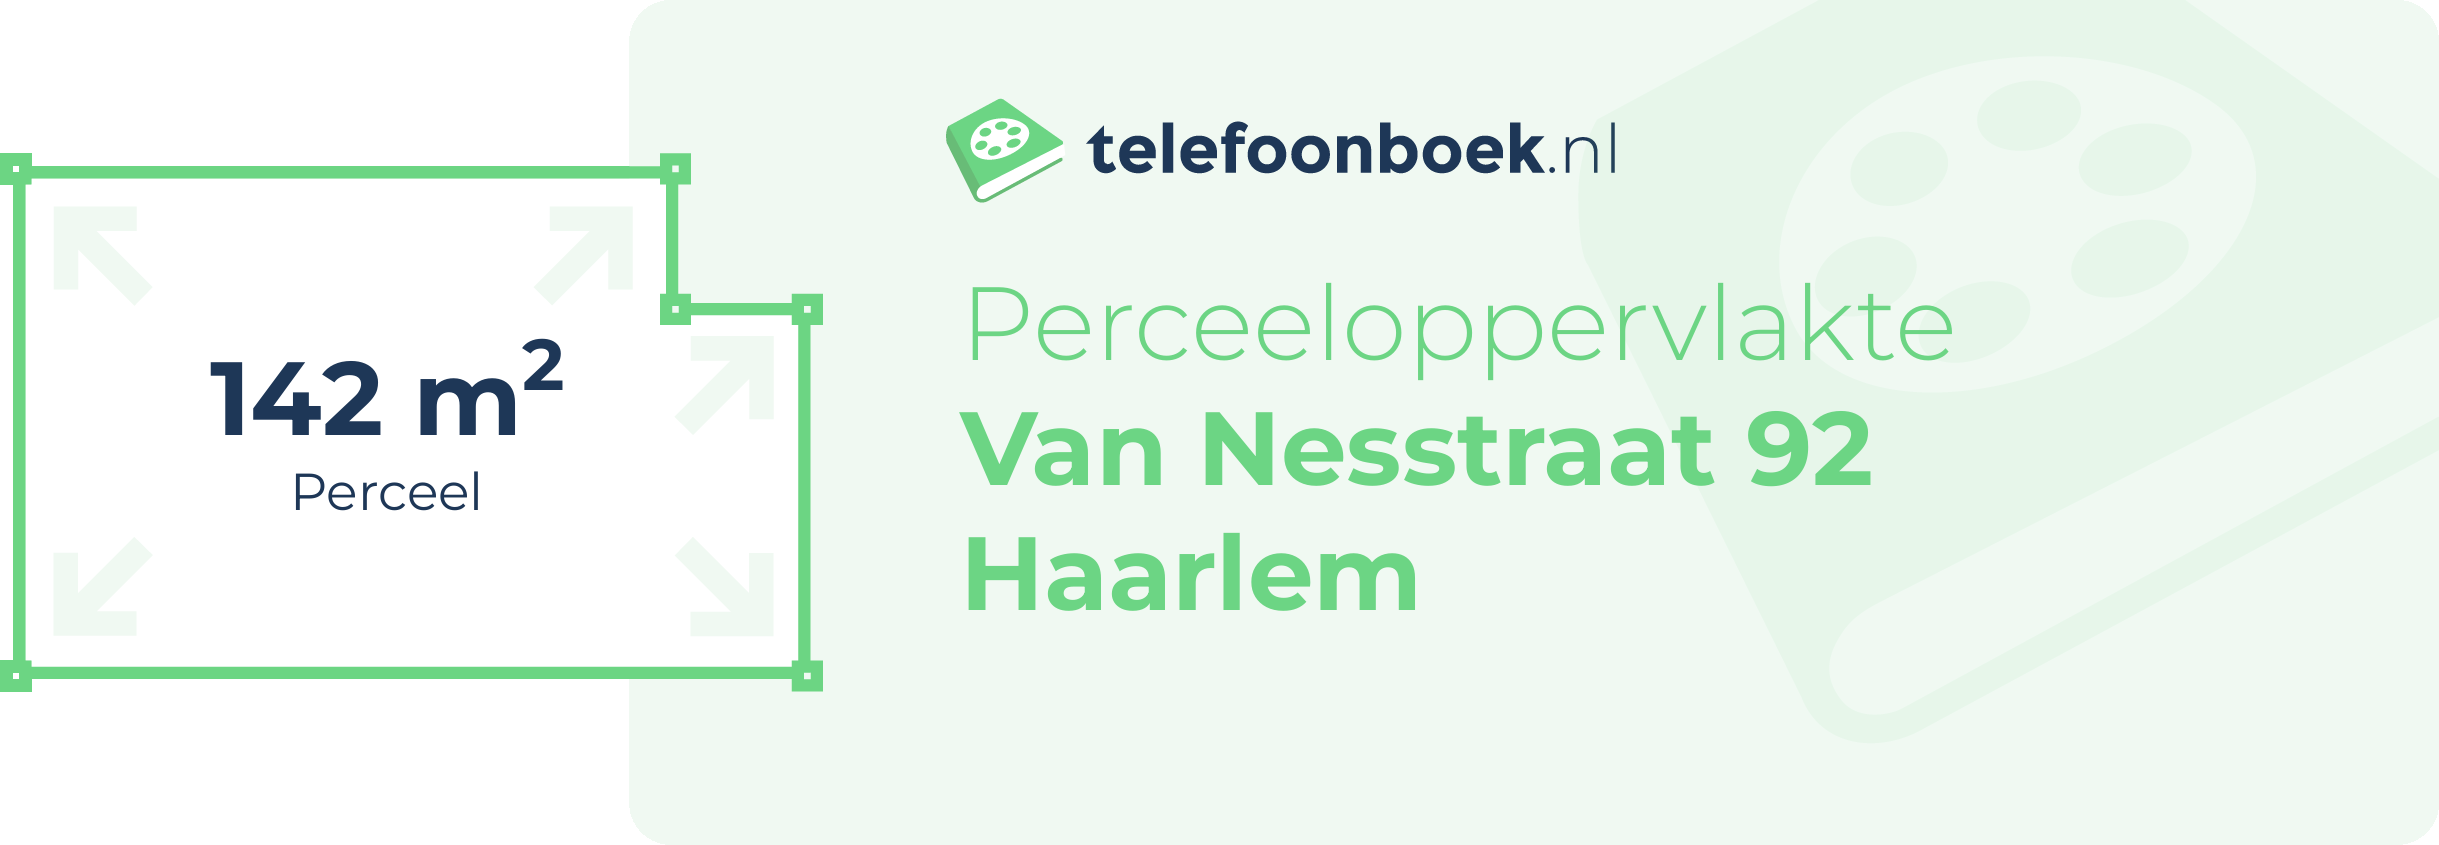 Perceeloppervlakte Van Nesstraat 92 Haarlem